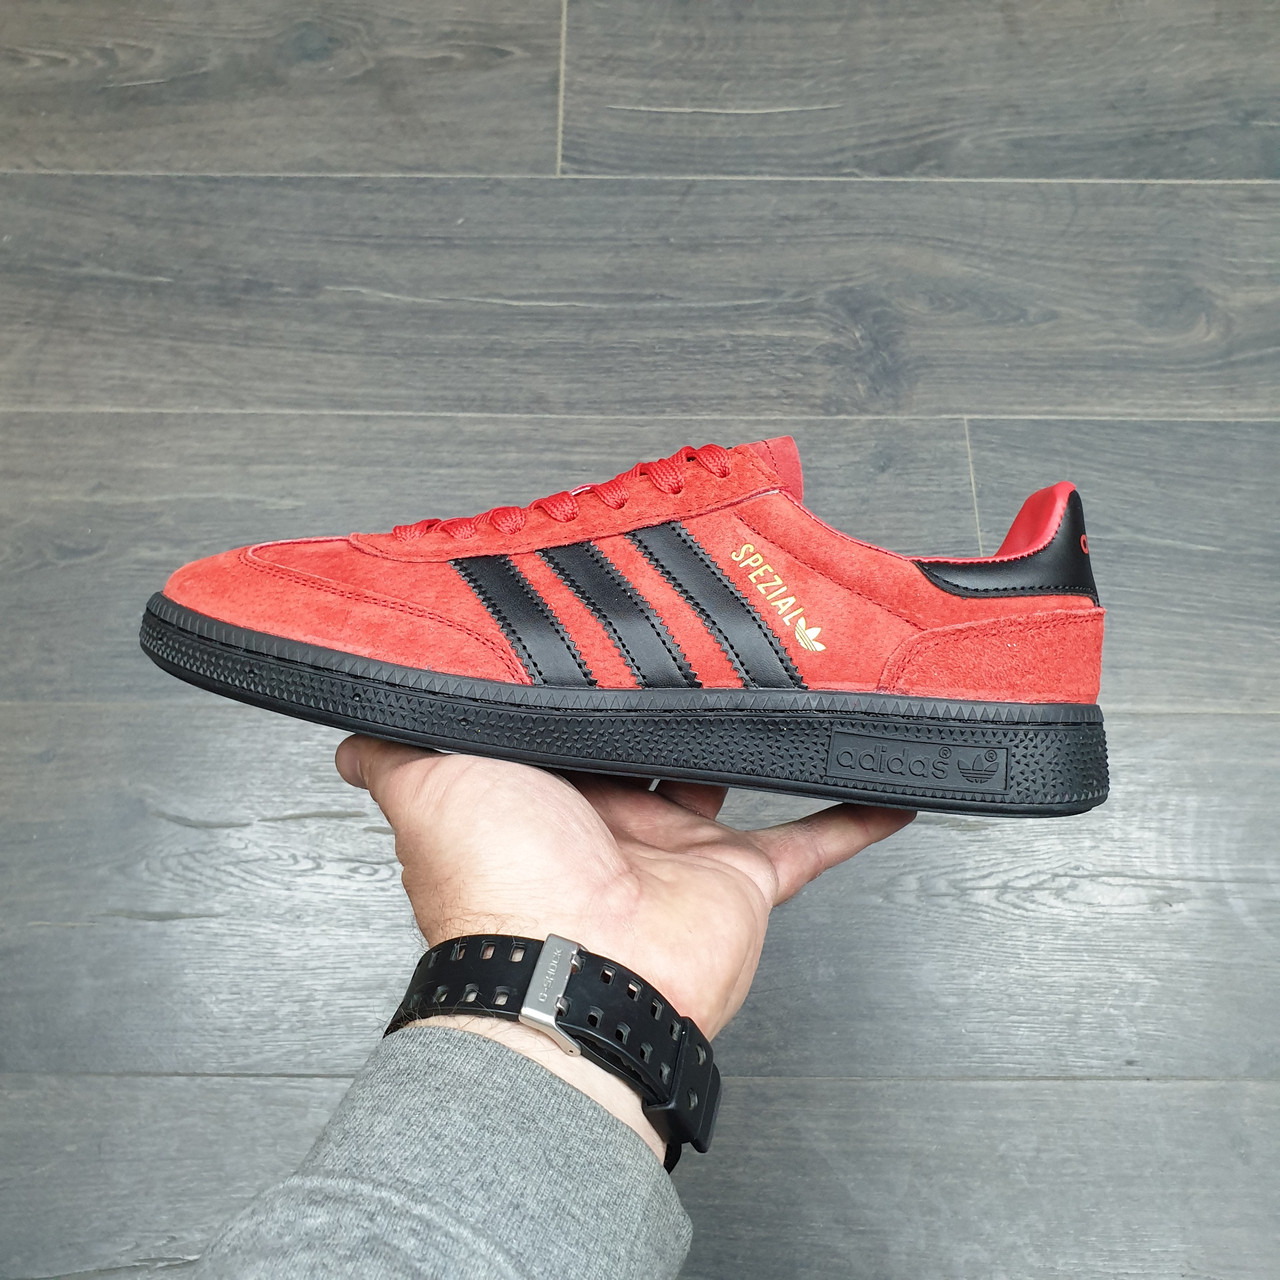 Кроссовки Adidas Spezial Red